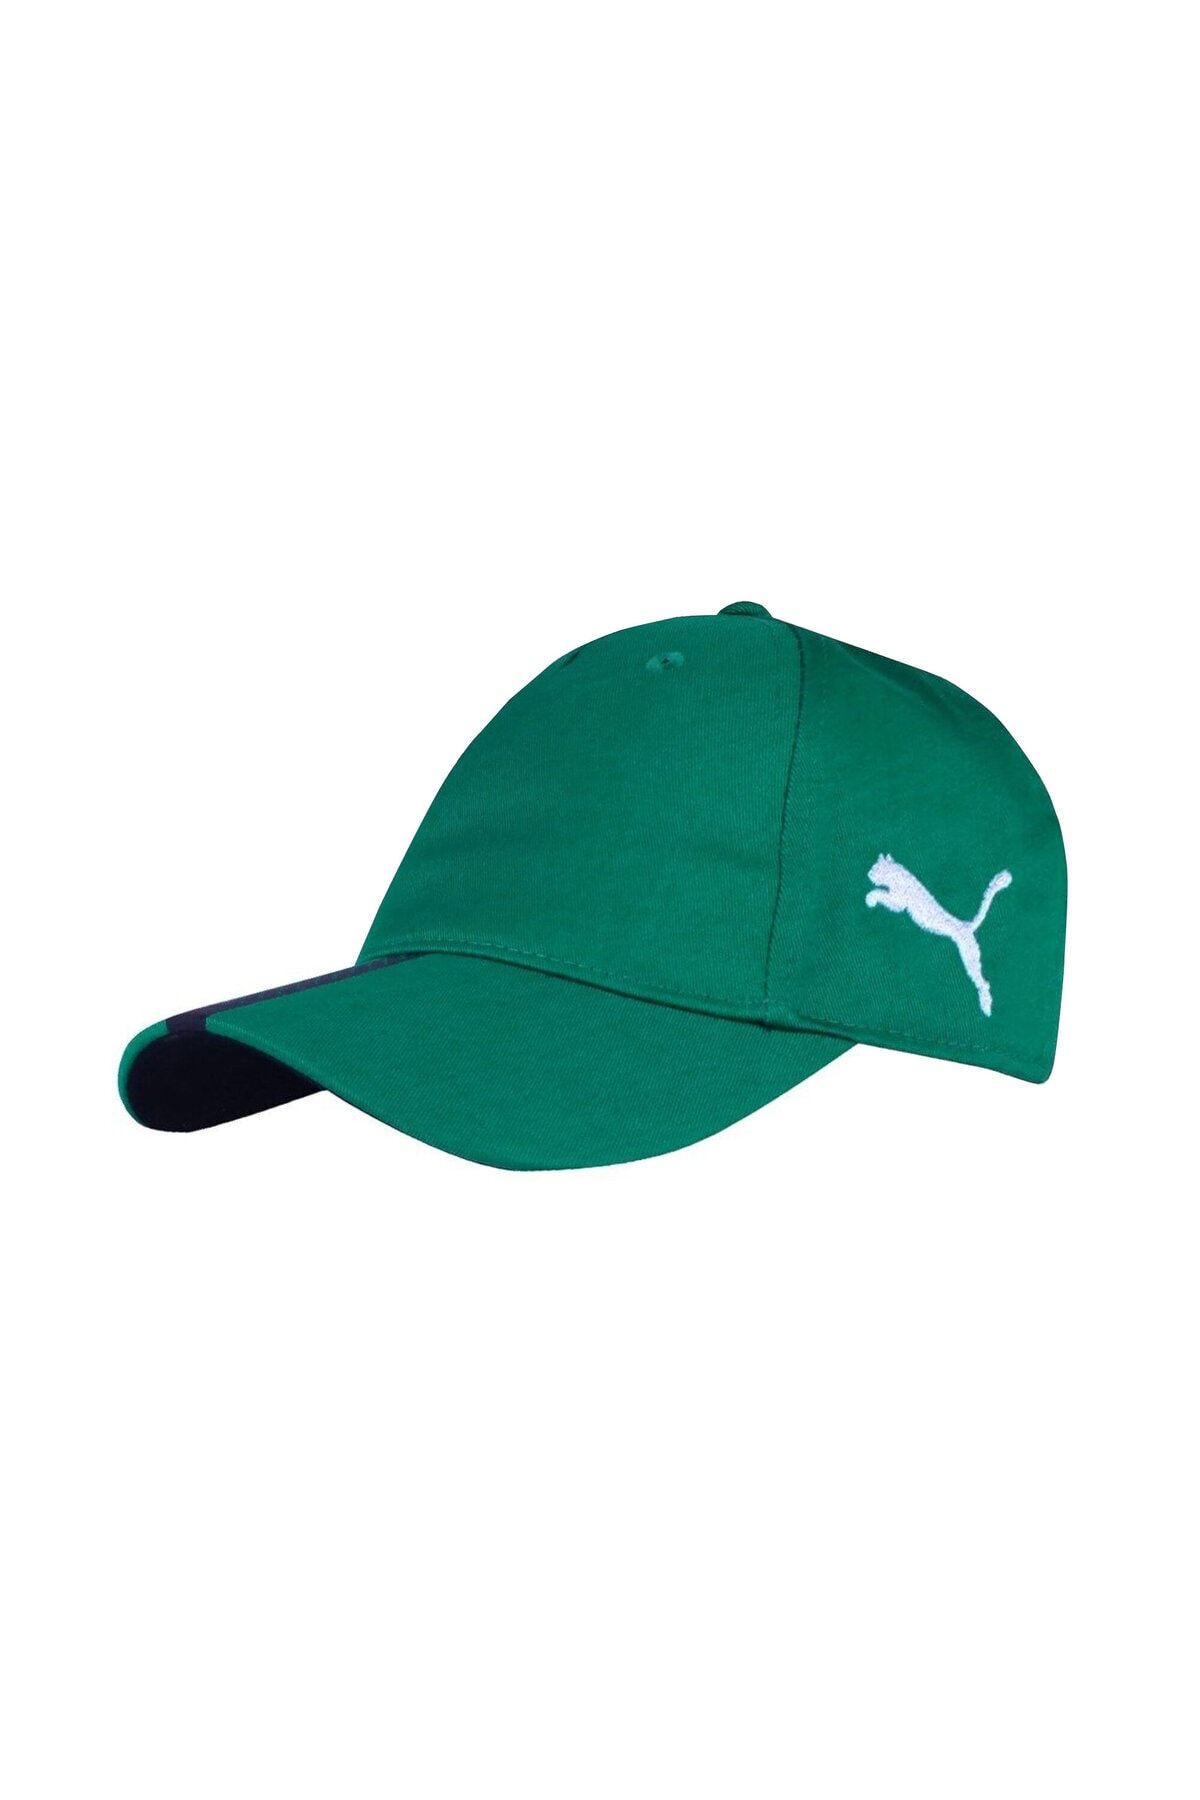 Puma Liga Cap Şapka 2235604 Yeşil